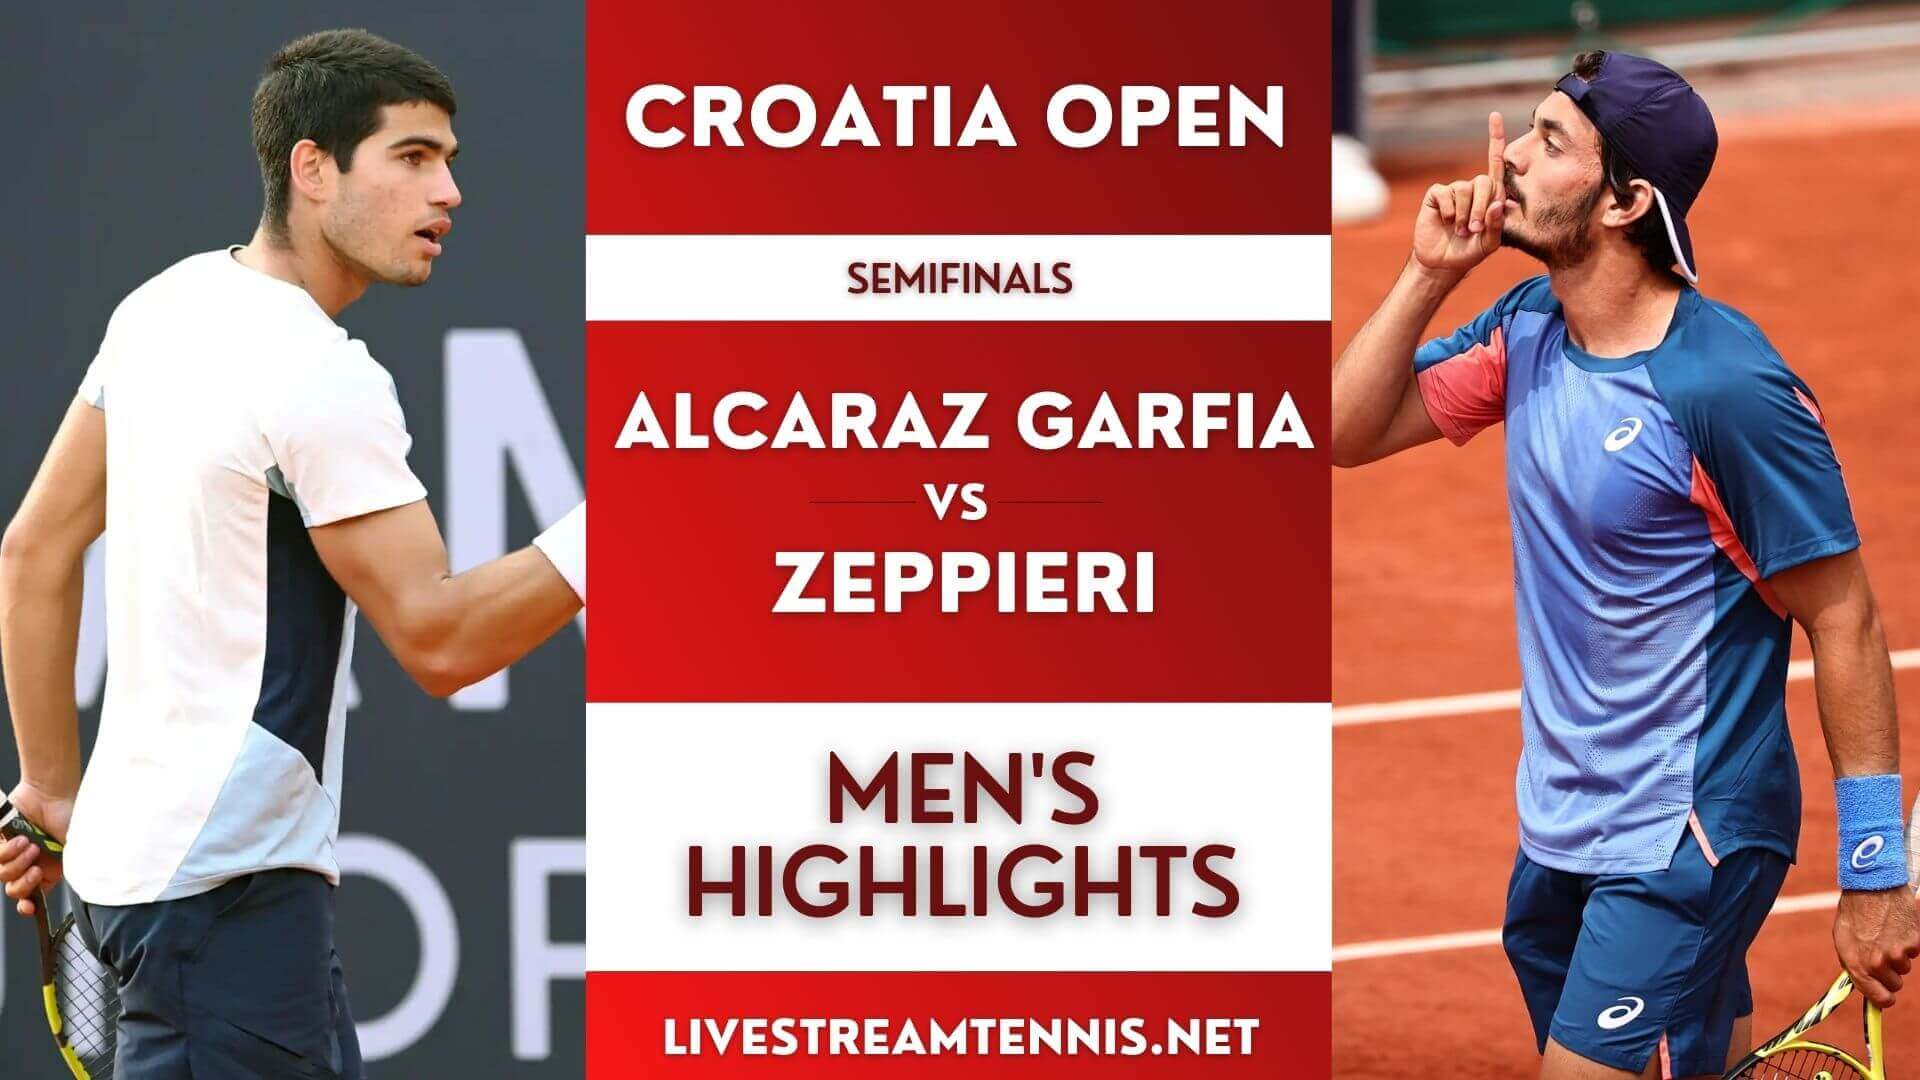 Croatia Open ATP Semifinal 2 Highlights 2022